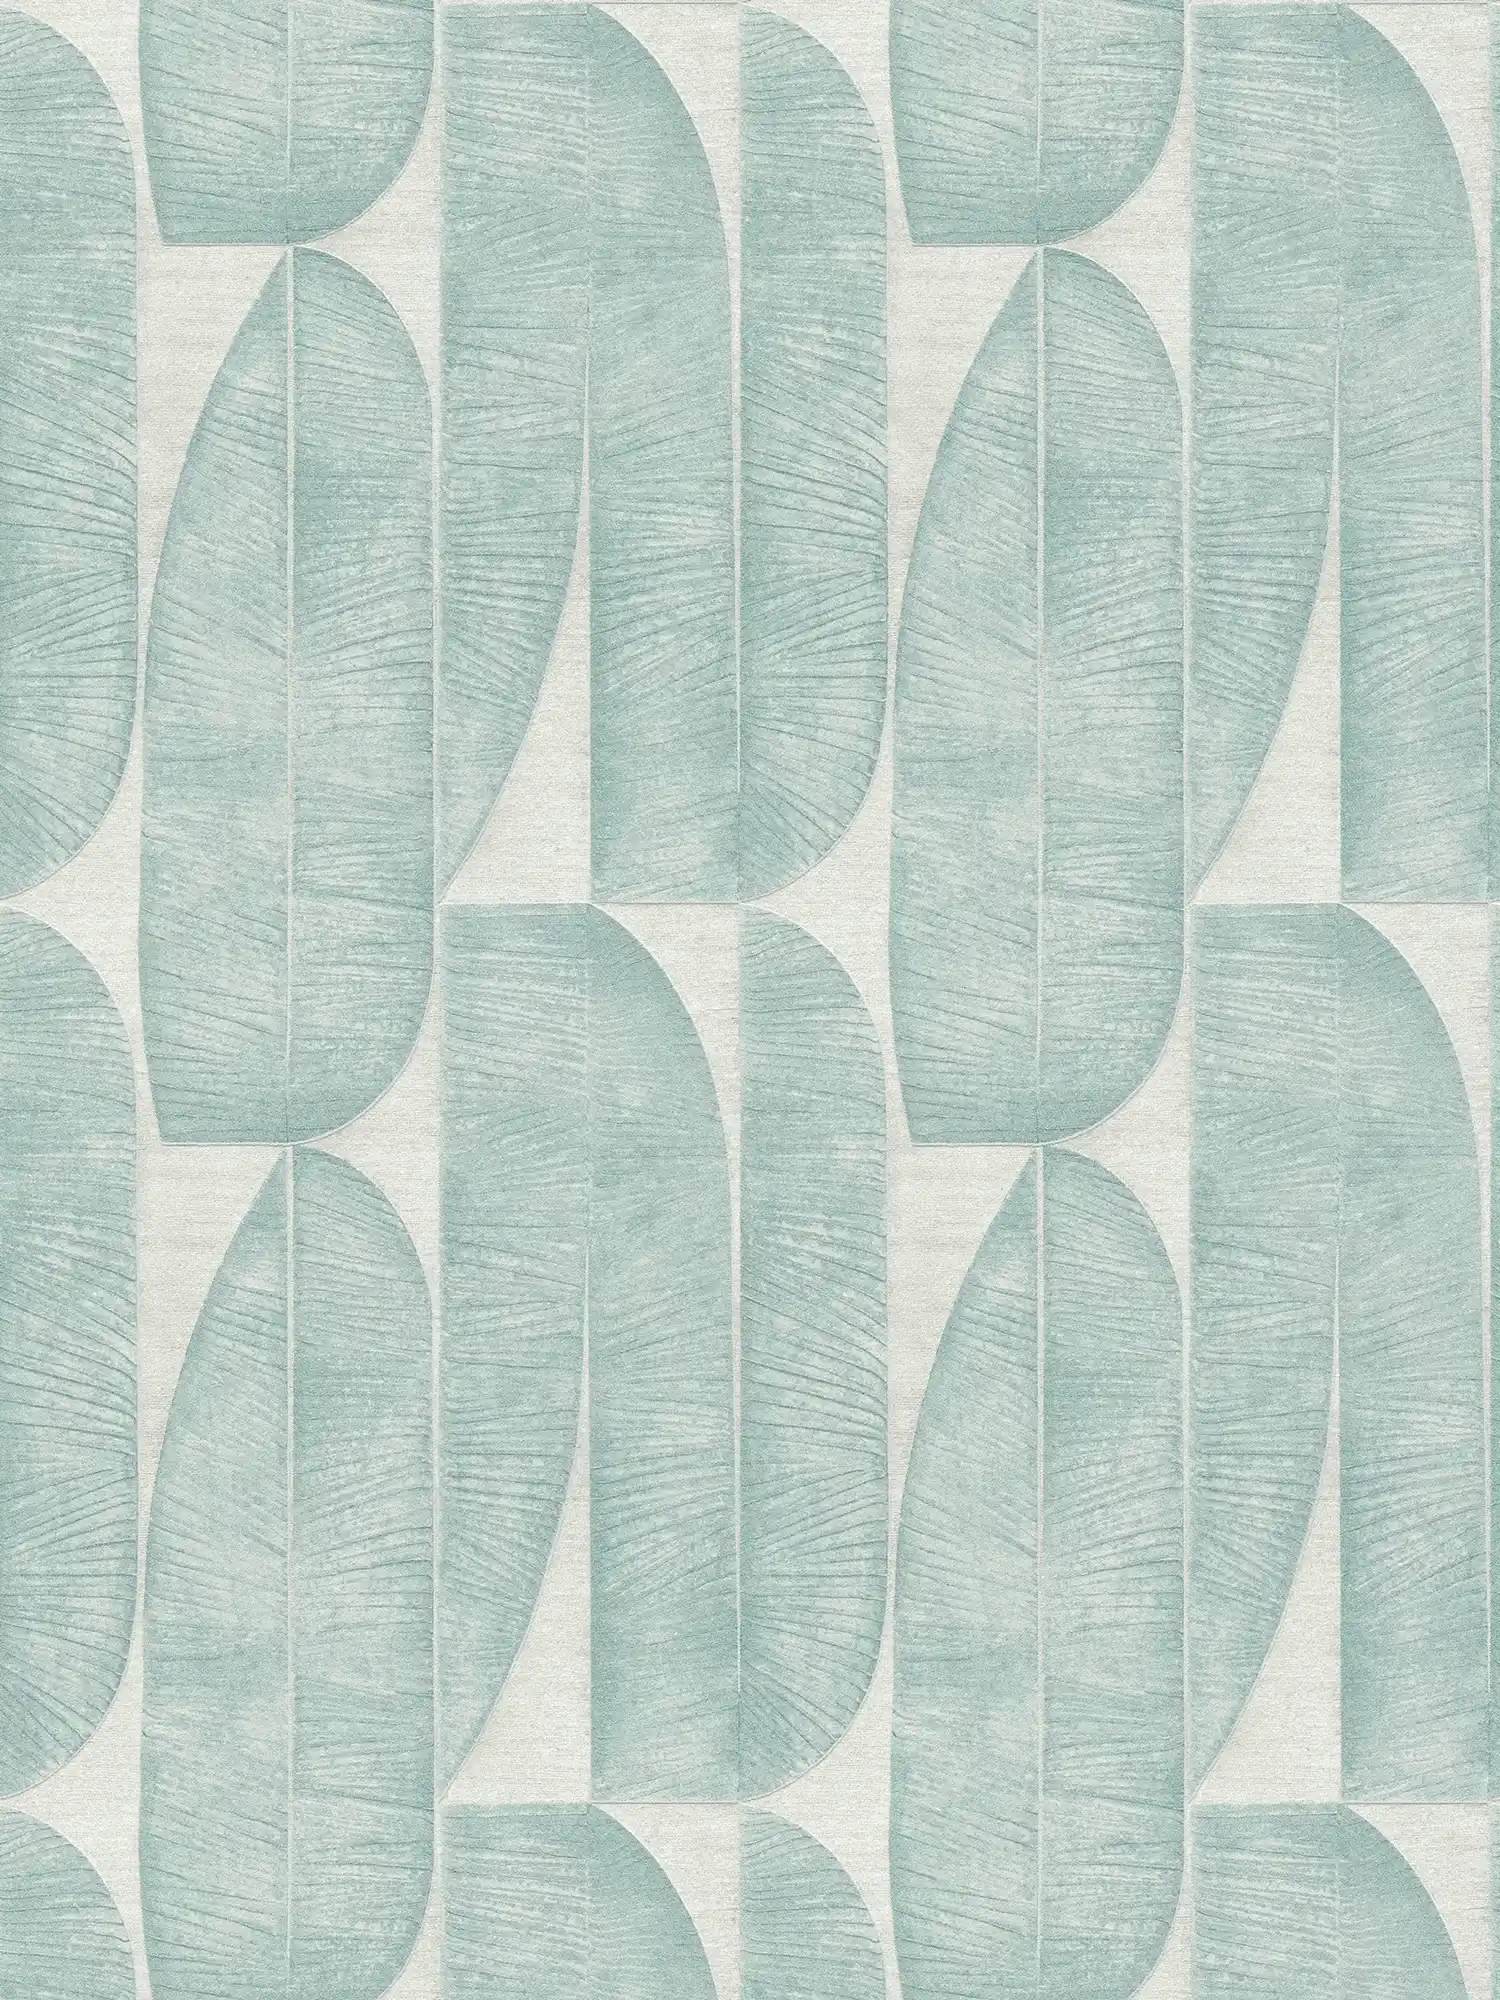 Carta da parati a trama leggera con motivo geometrico a foglie - grigio, blu, turchese
